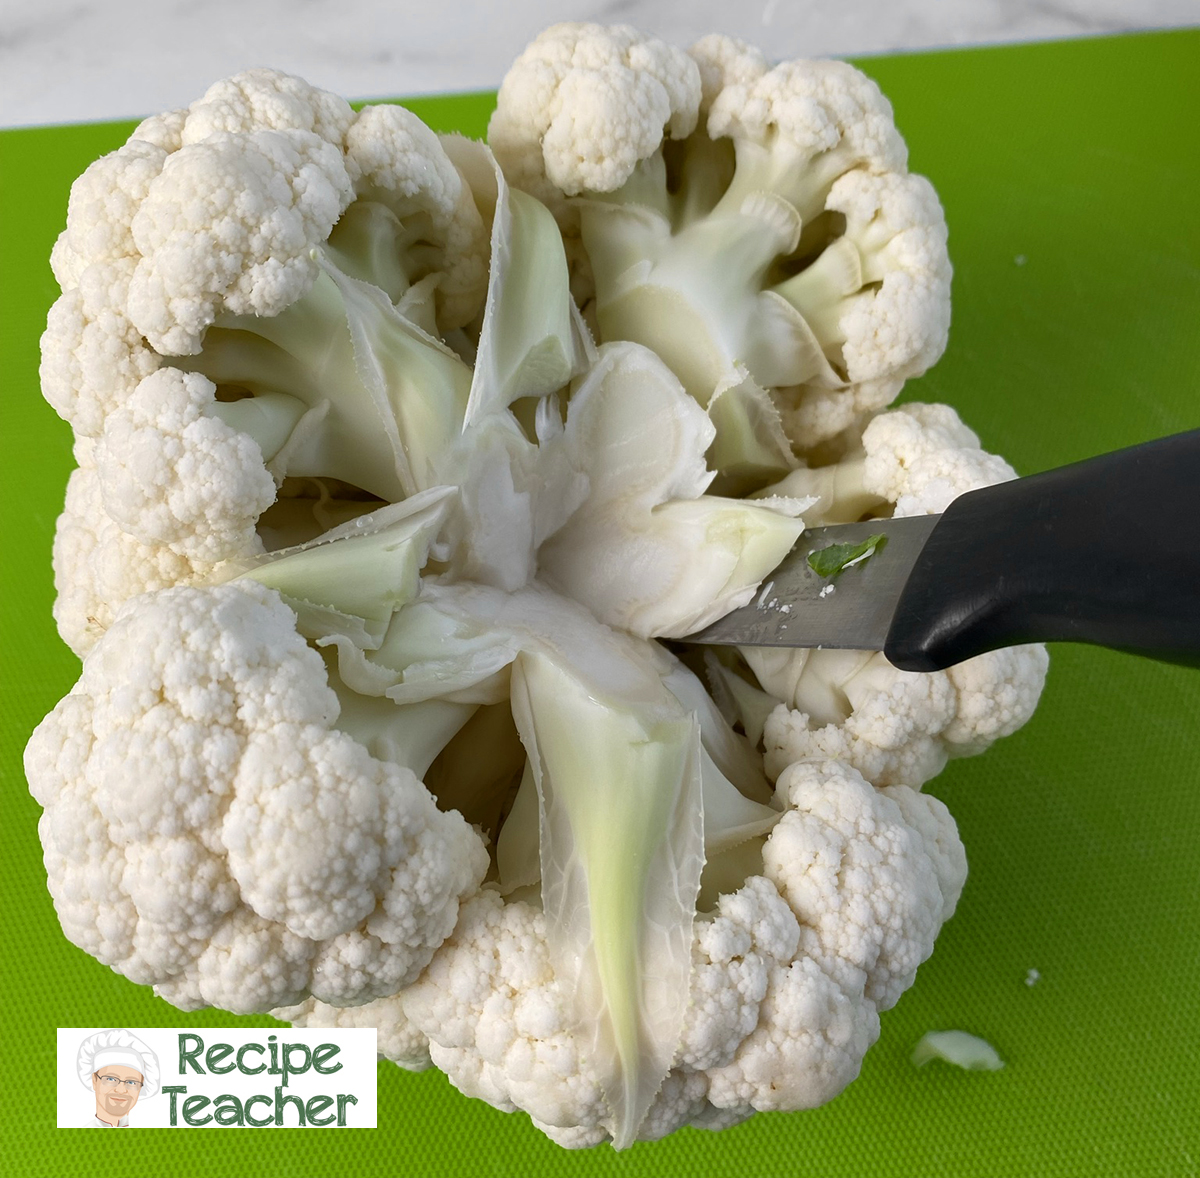 Recipe for air fryer cauliflower